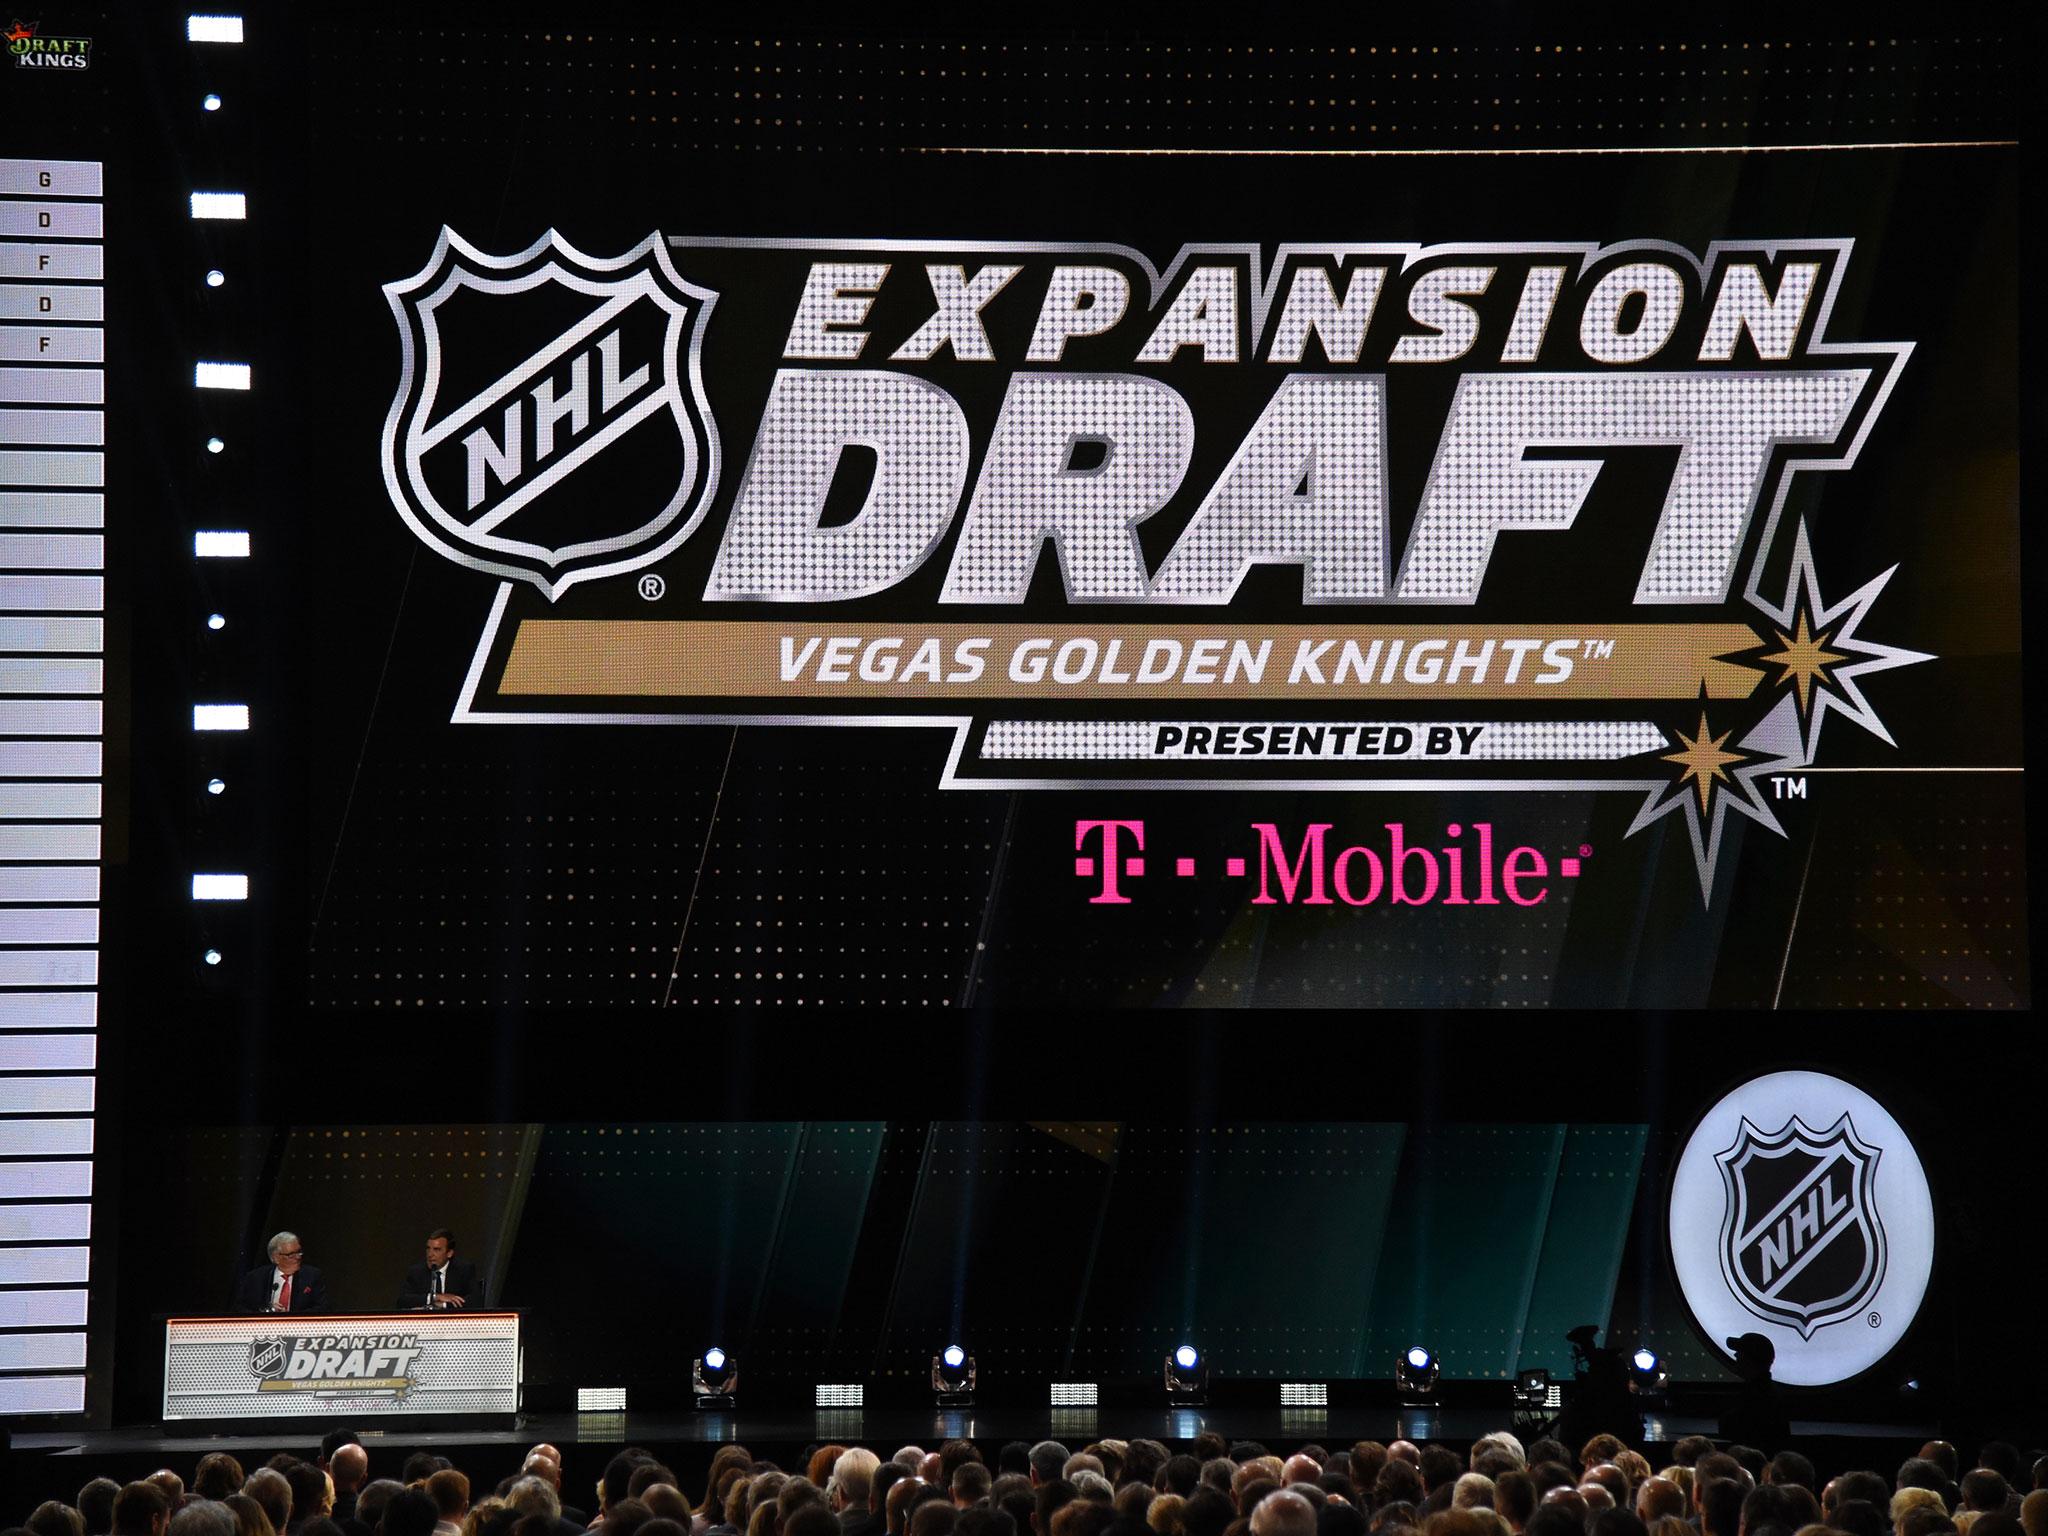 The NHL Expansion Draft was held last week